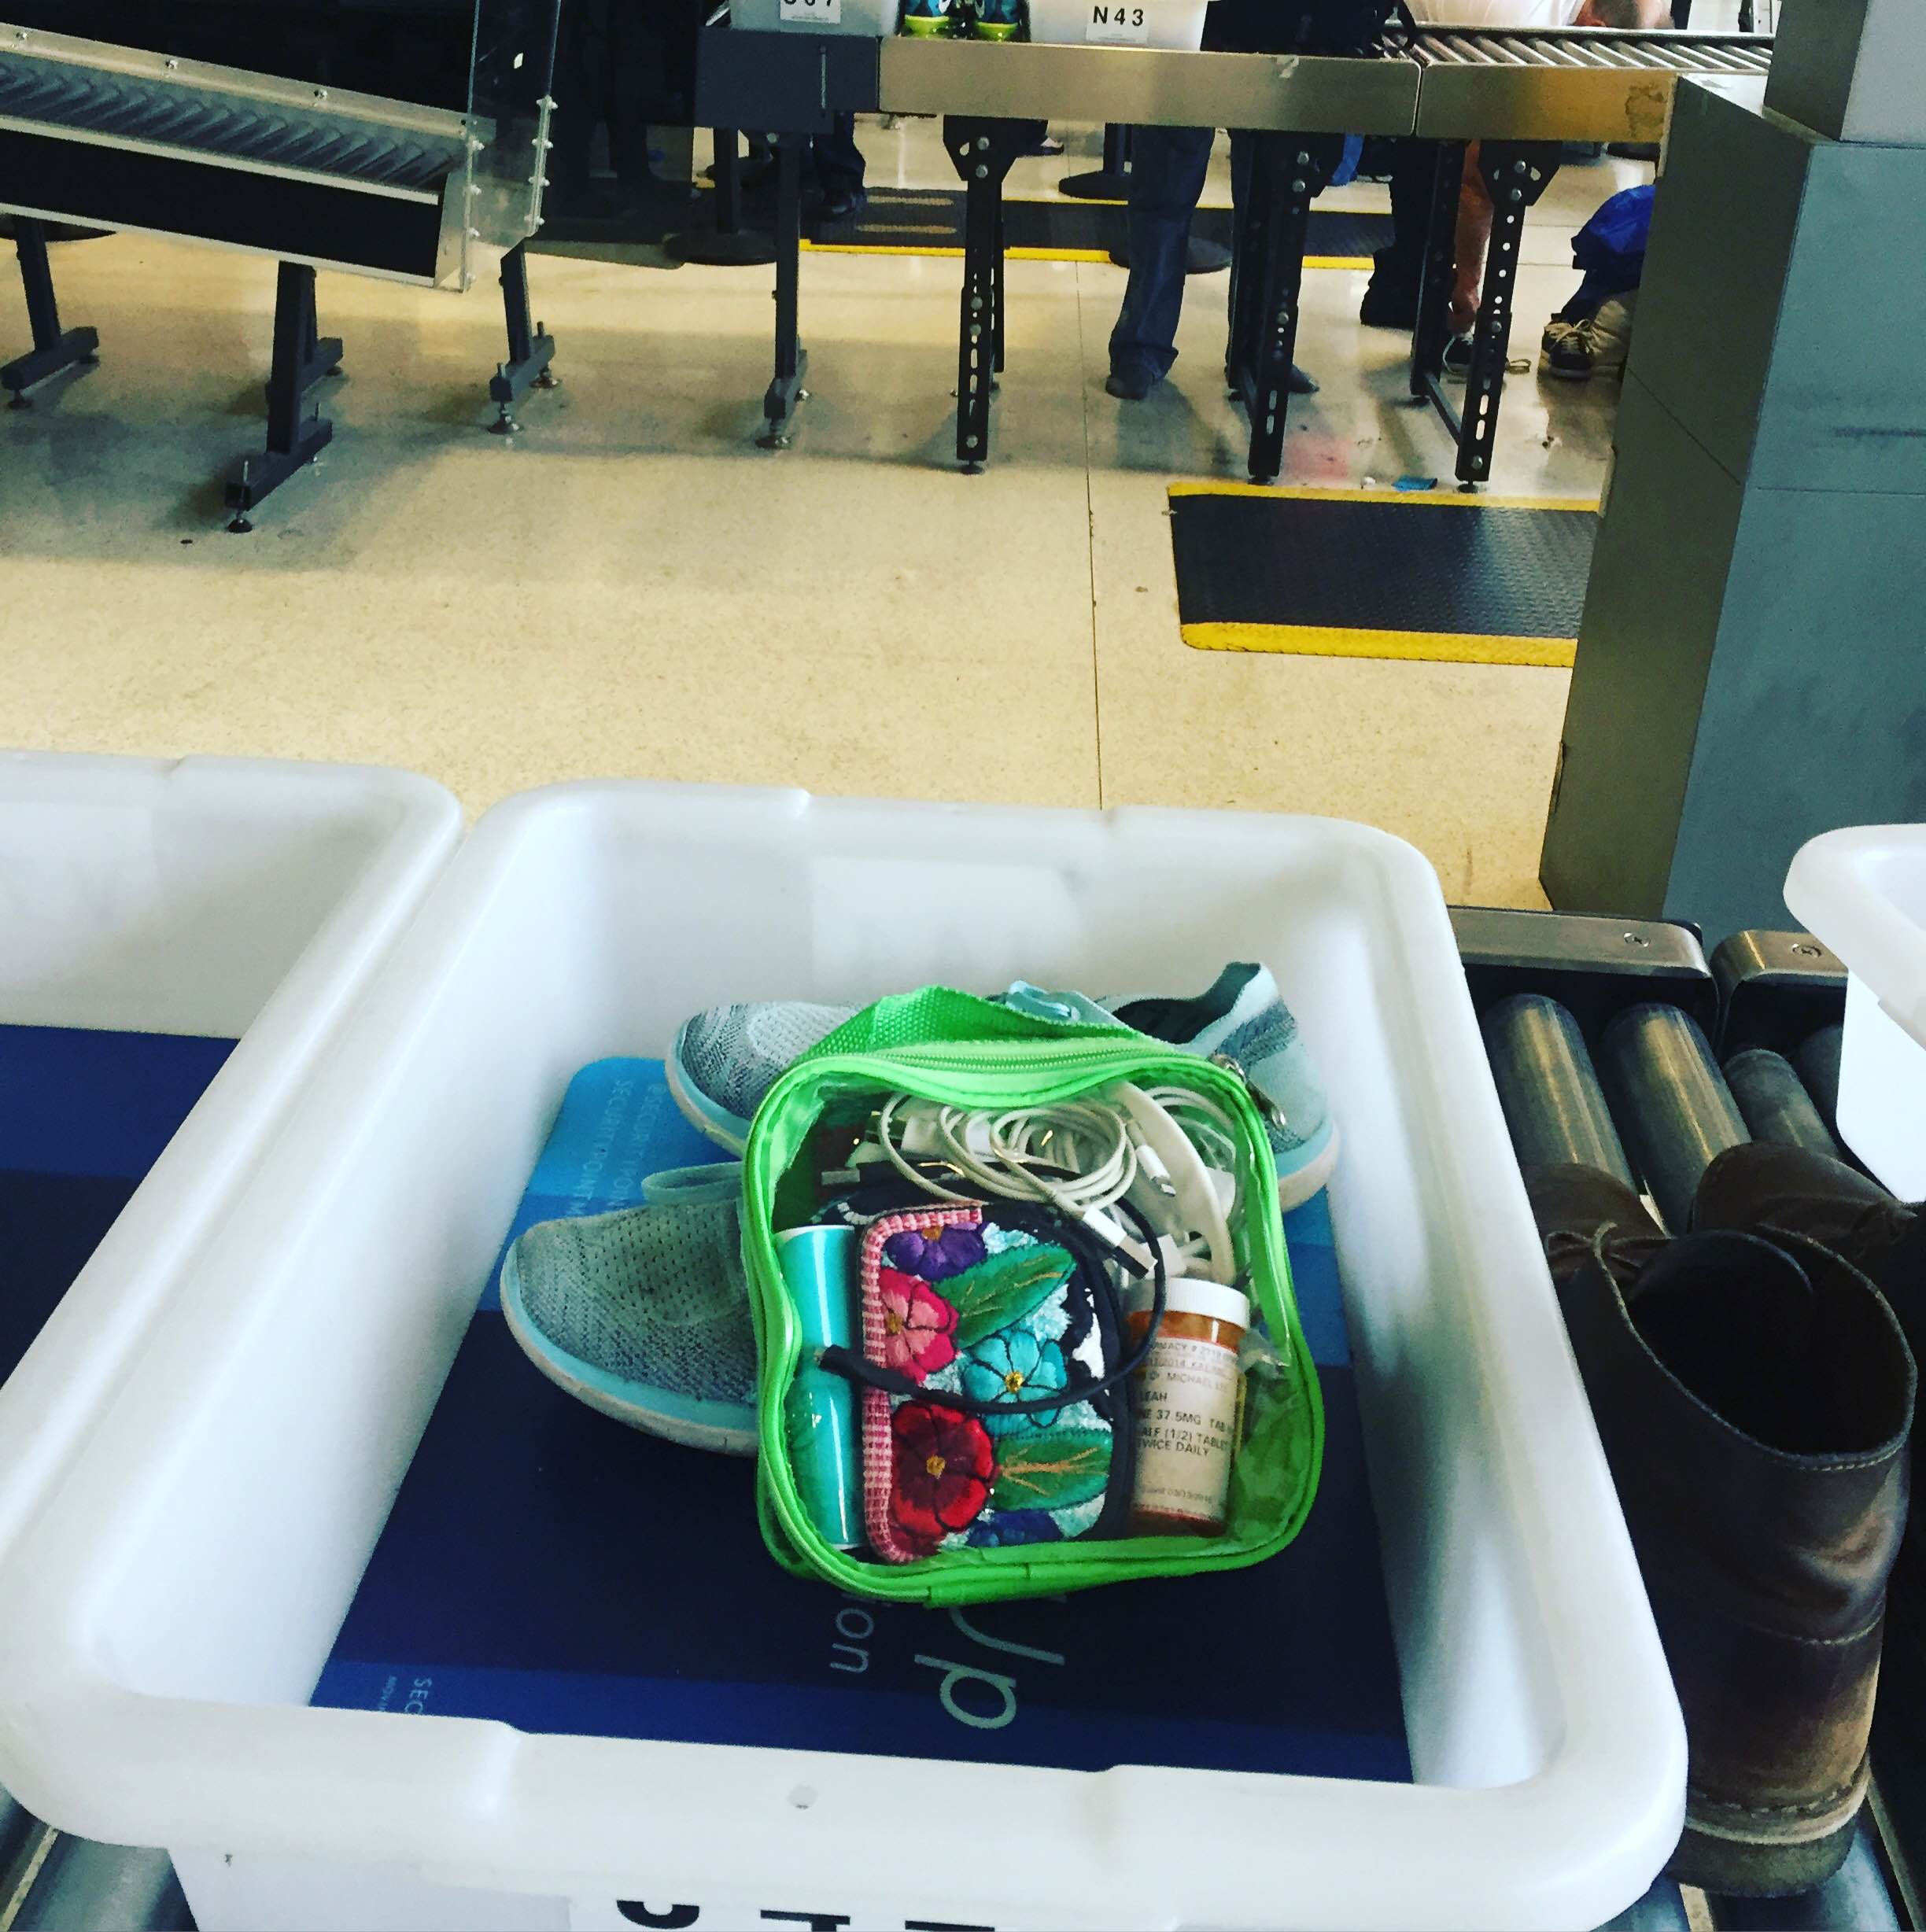 Prescription medications in airport security bin